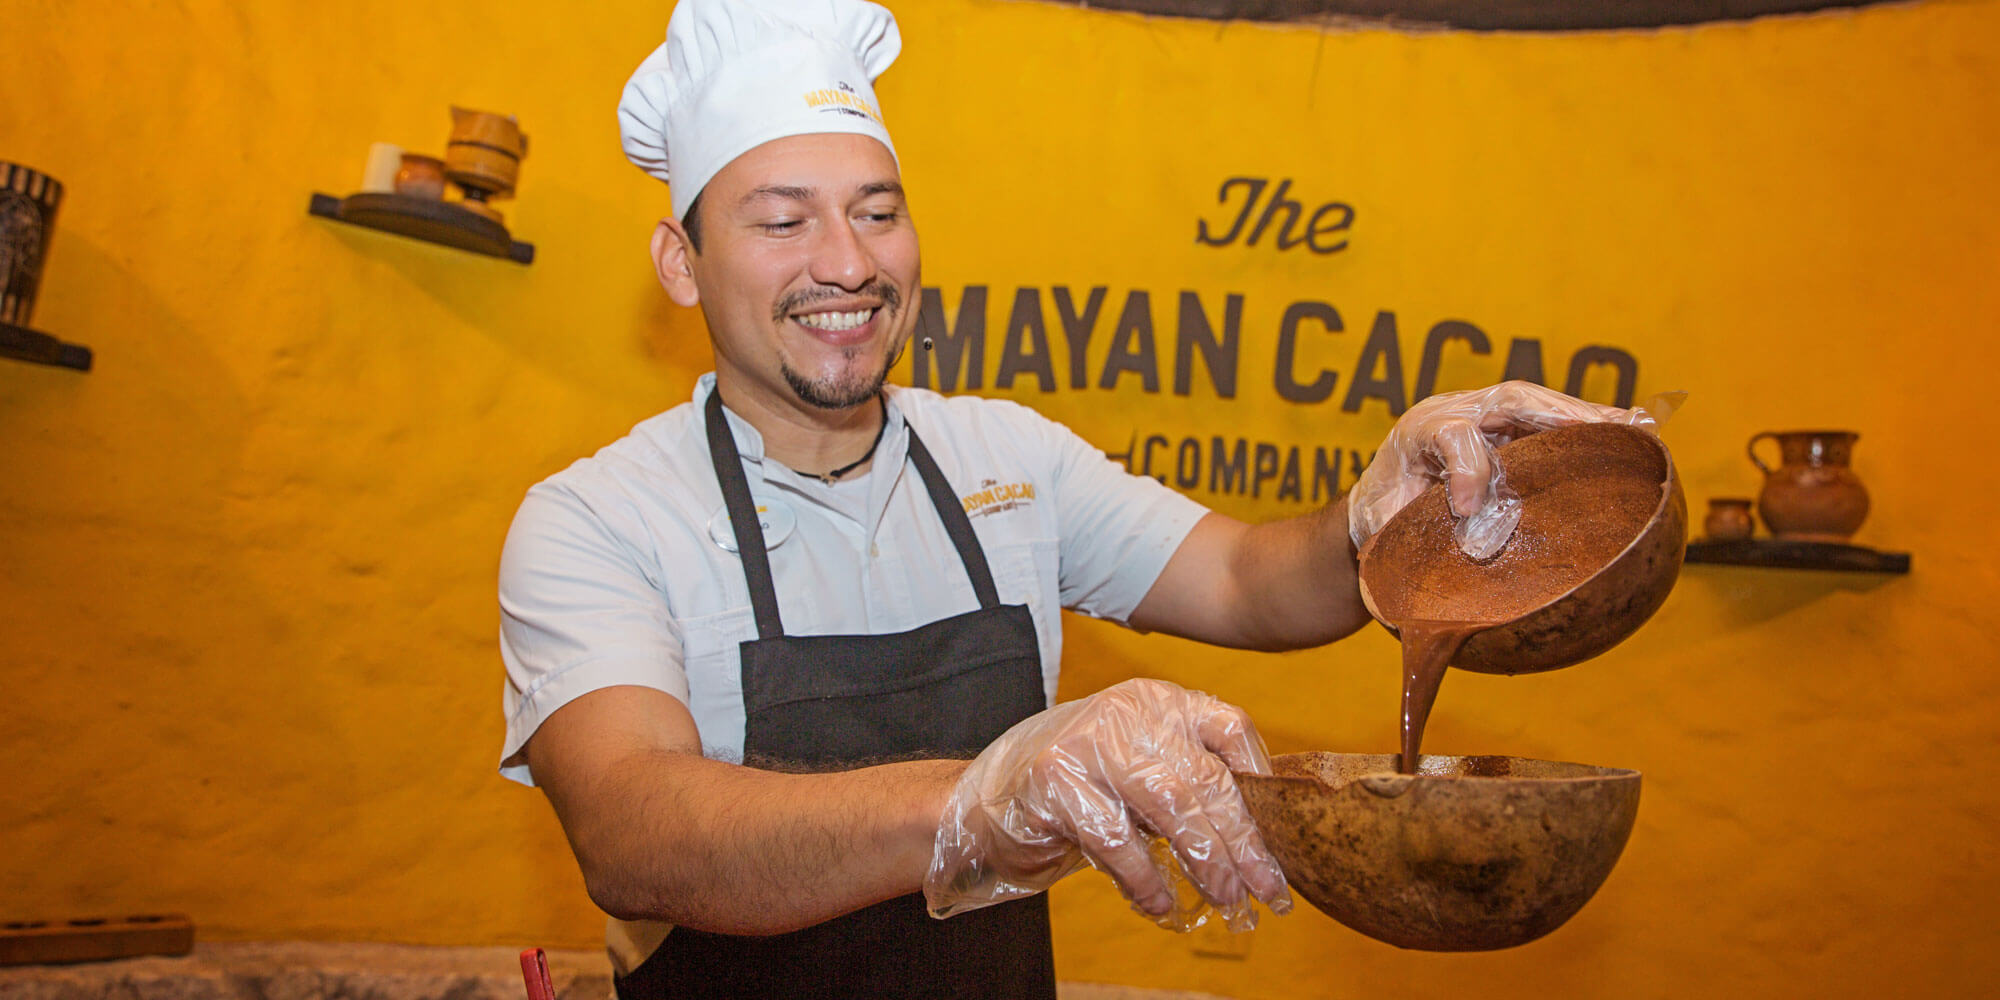 The Mayan Cacao Shop